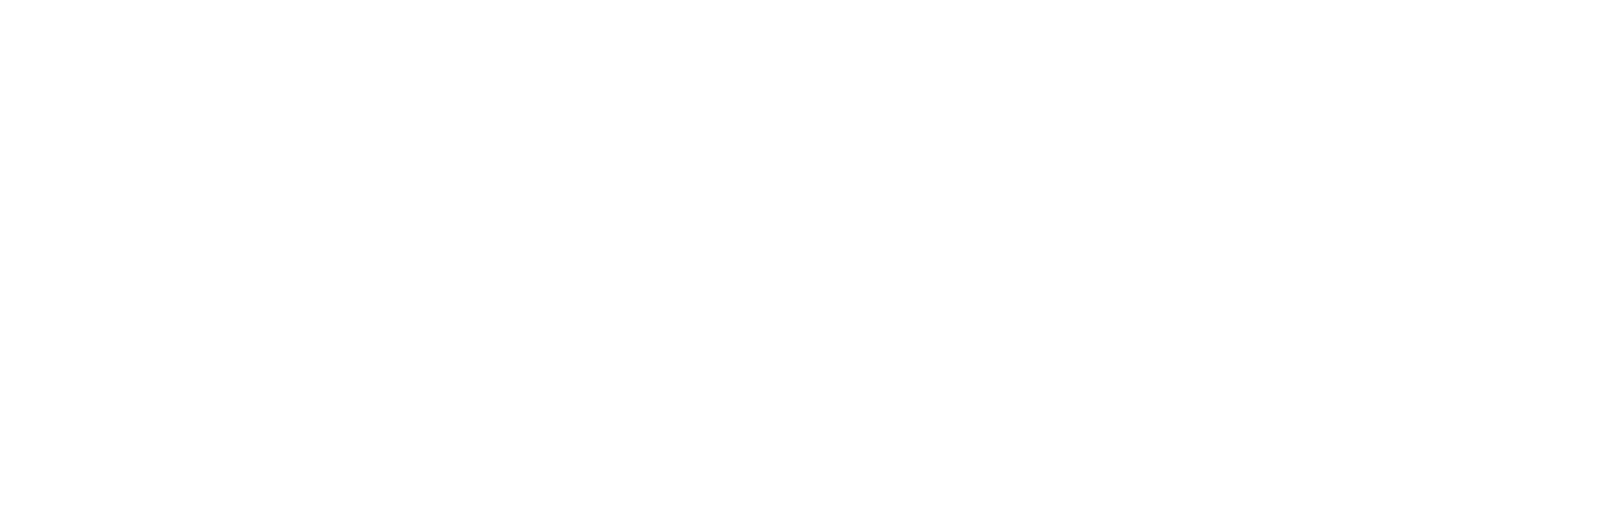 The Mindset Explorer